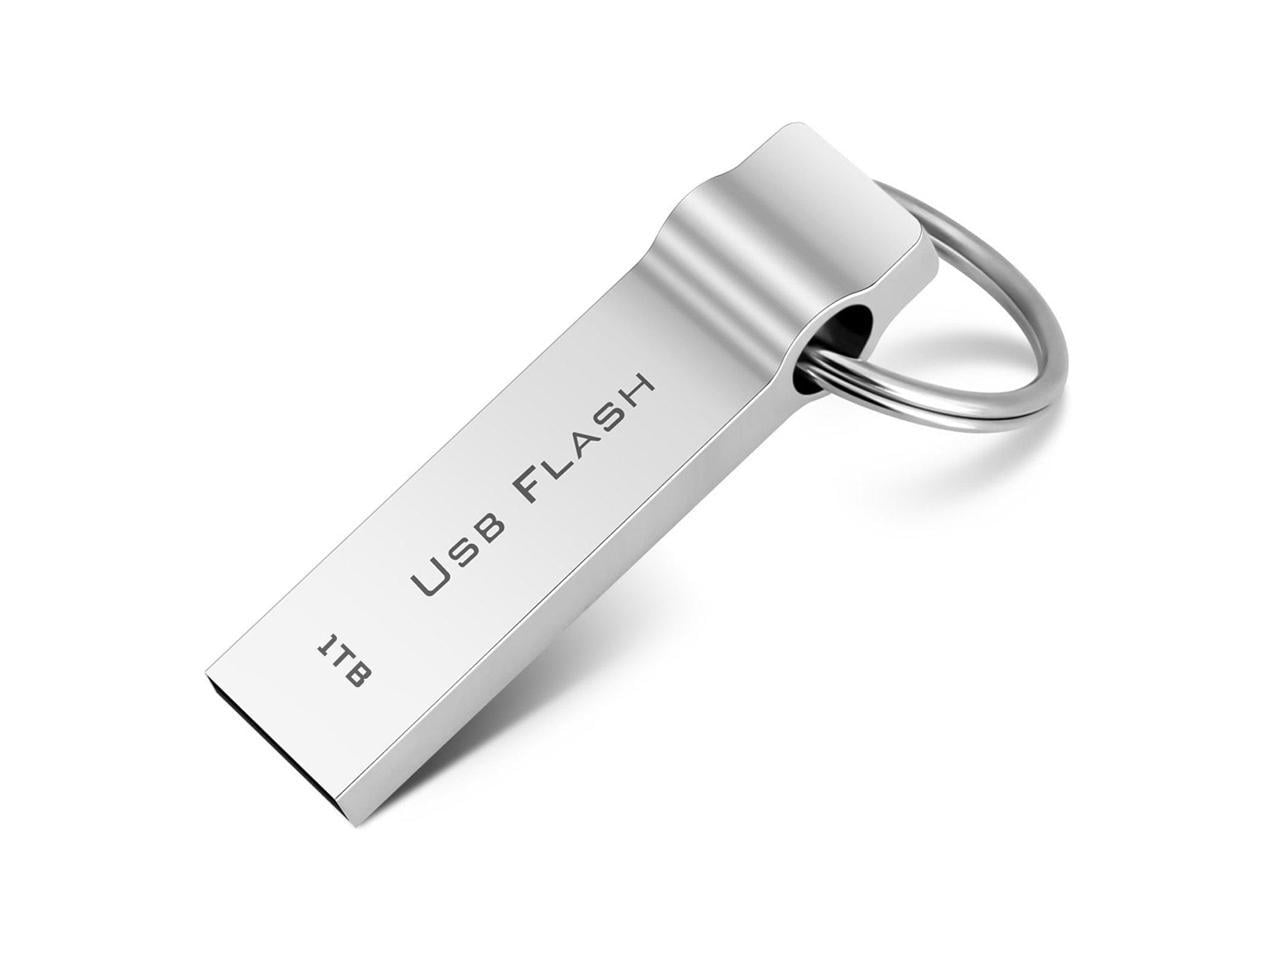 Erasky Waterproof 1000 GB USB Flash Drive Thumb Drive Pen Drive Memory Stick with Keychain